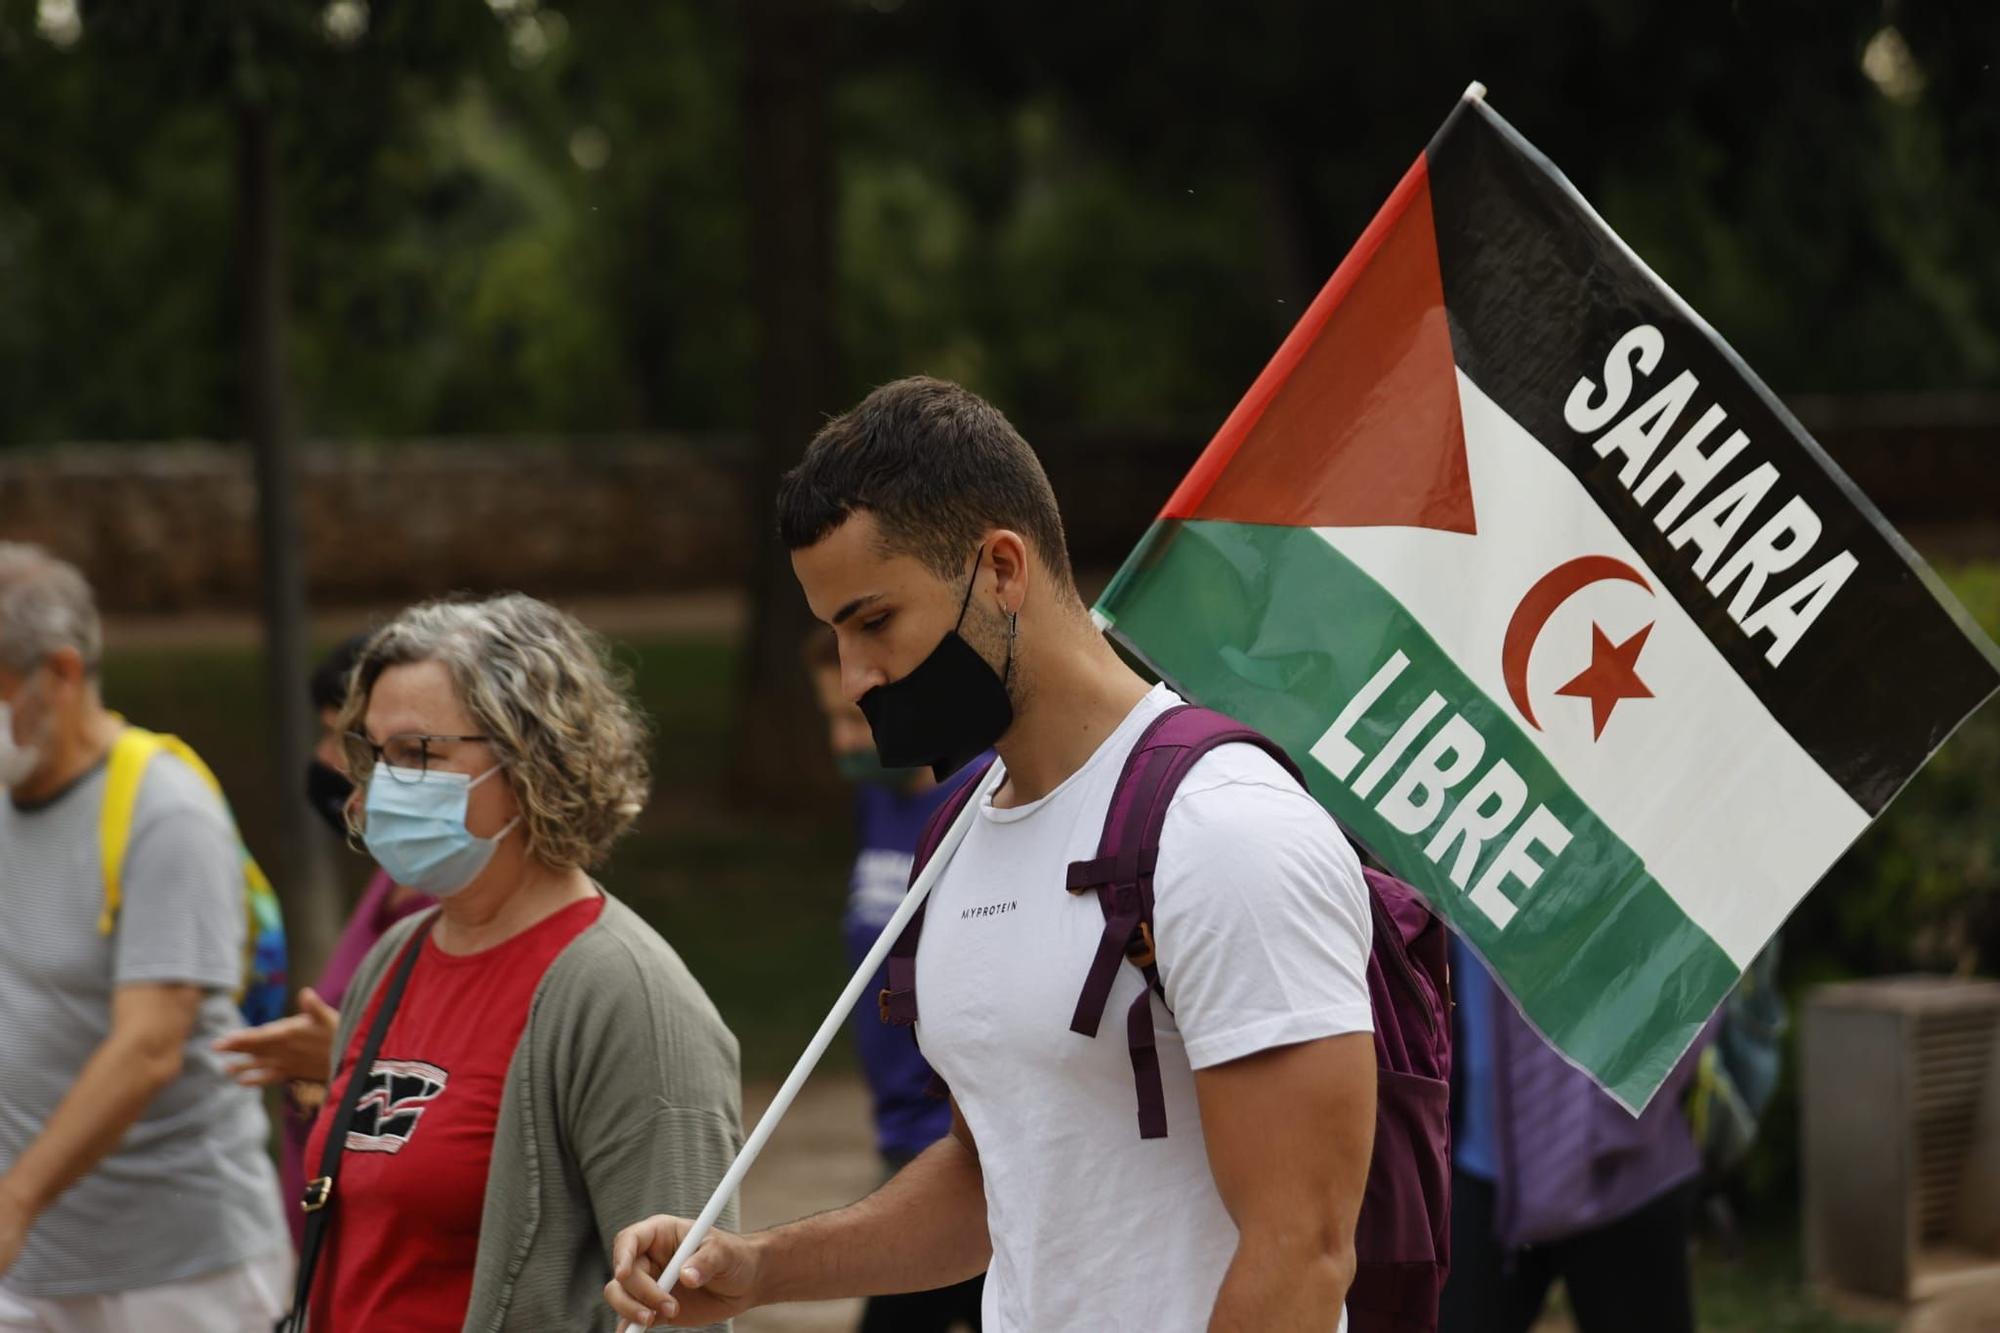 Sale de València la marcha que reclama la libertad de pueblo saharaui